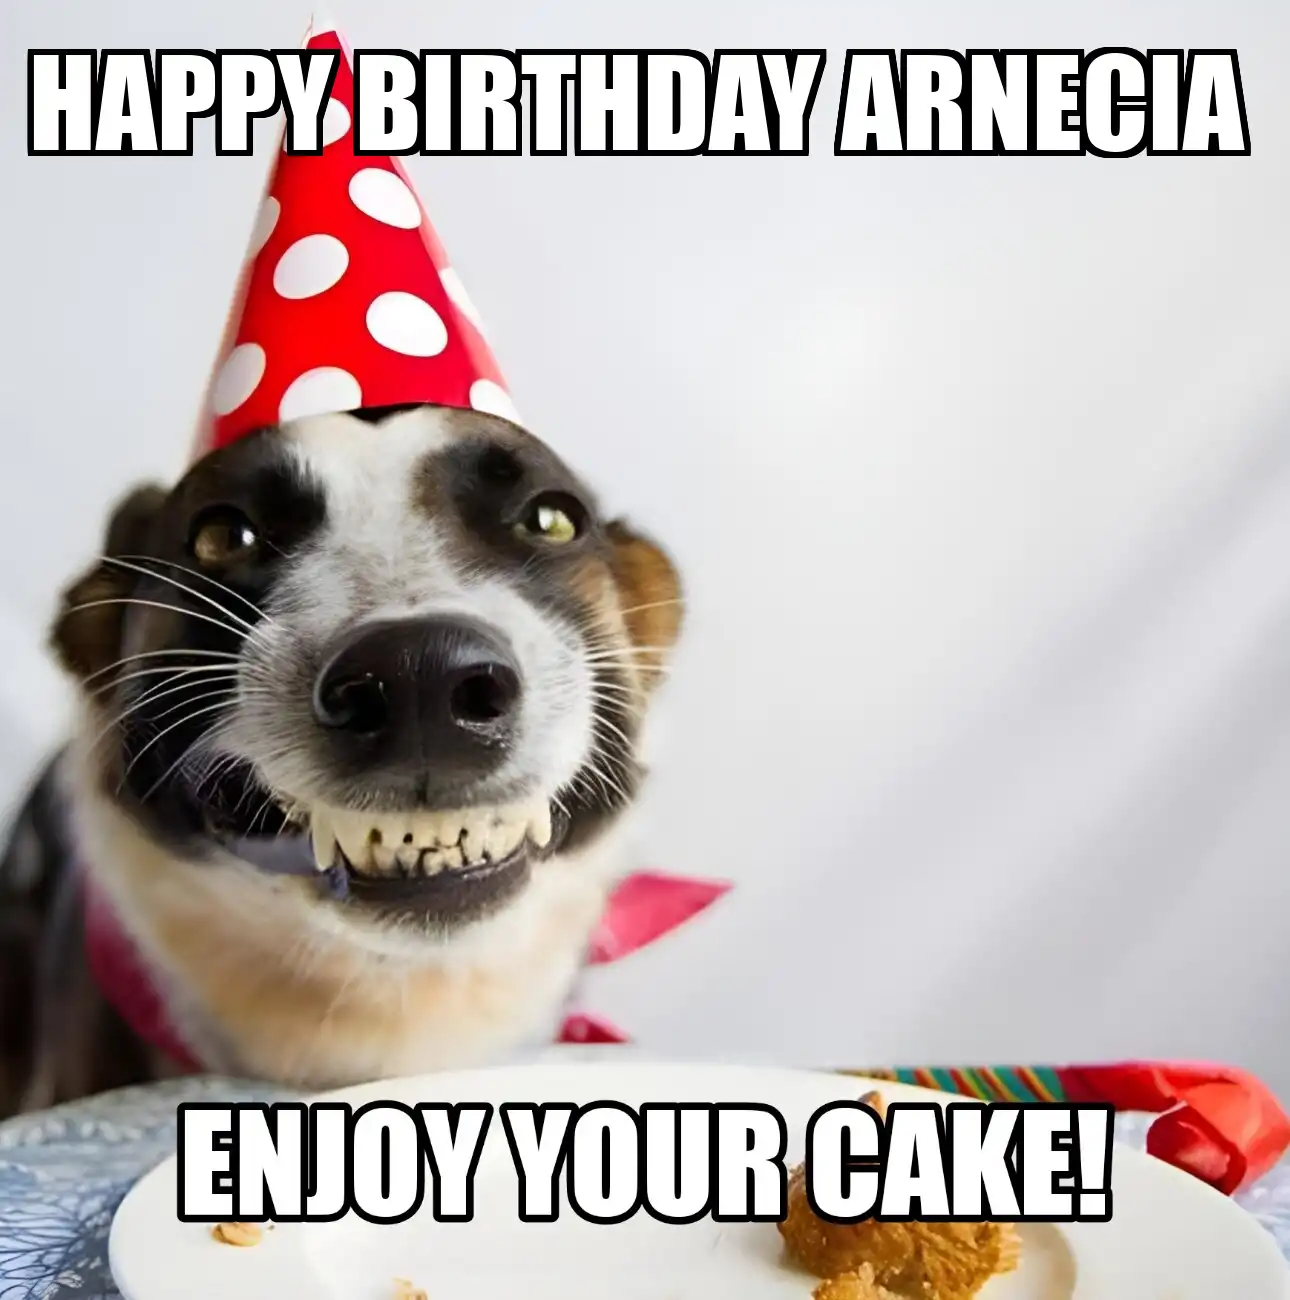 Happy Birthday Arnecia Enjoy Your Cake Dog Meme